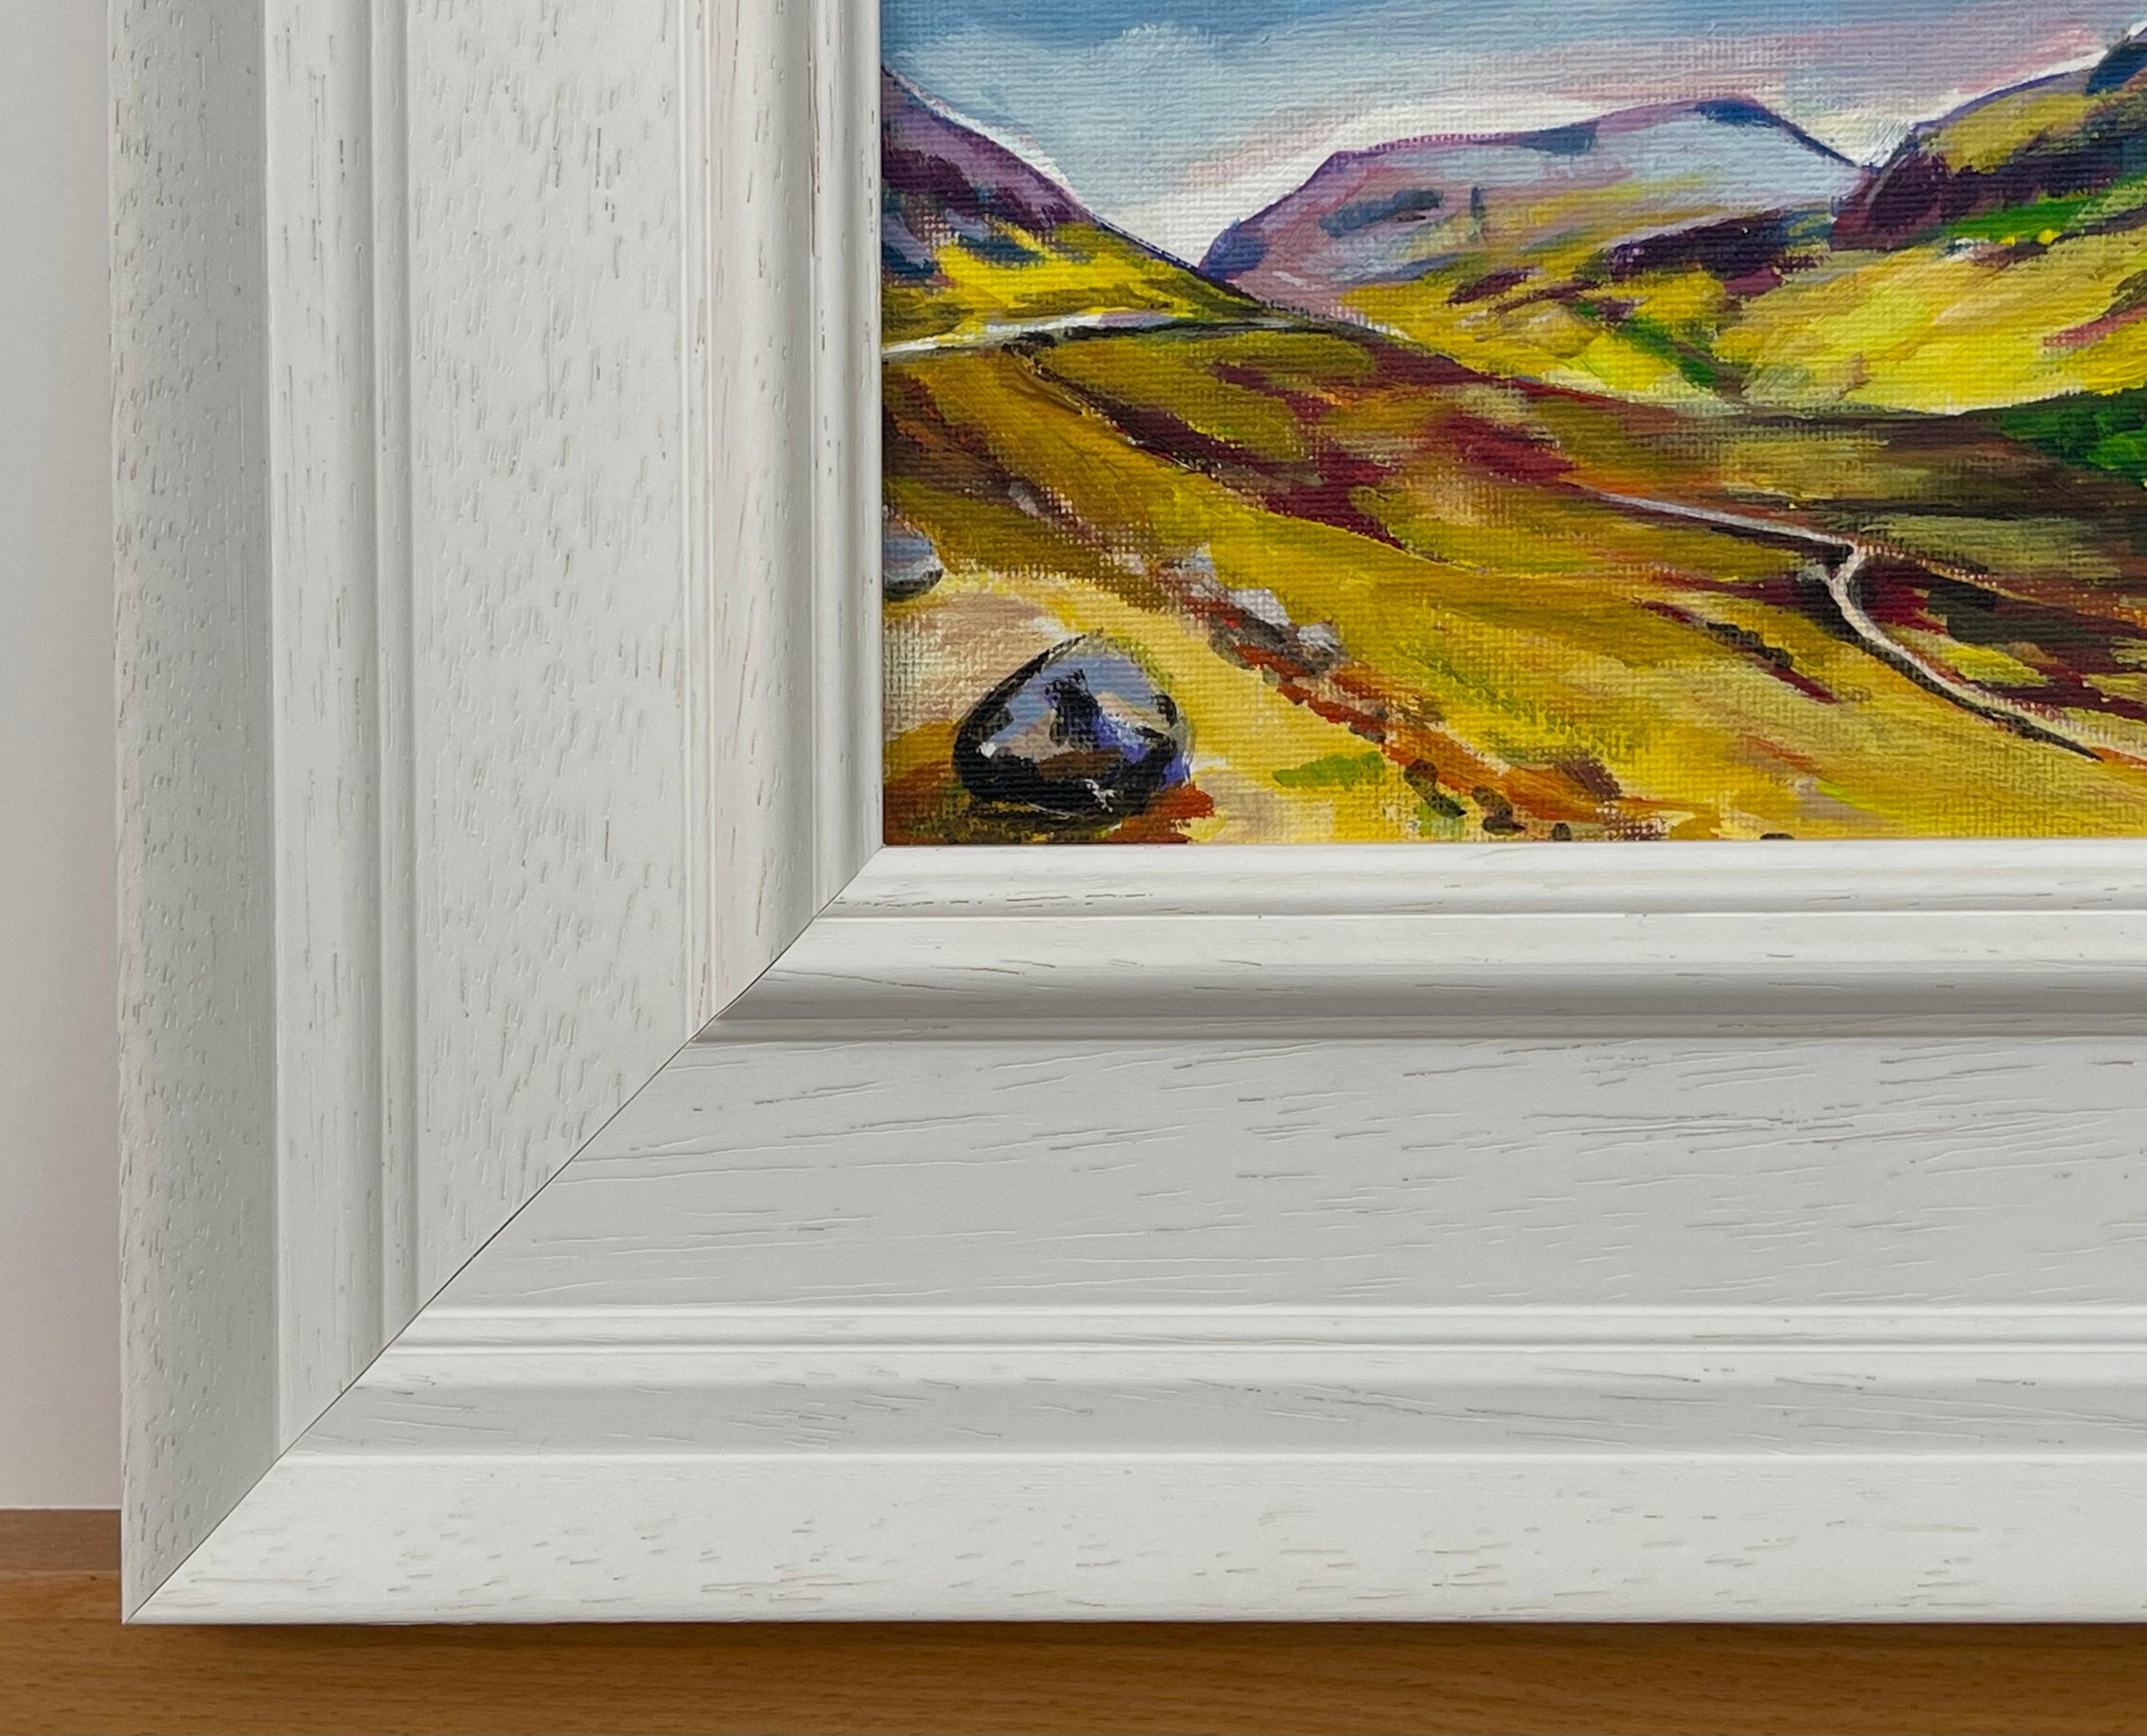 Miniature Landscape Study of Scottish Highlands by Contemporary British Artist 2